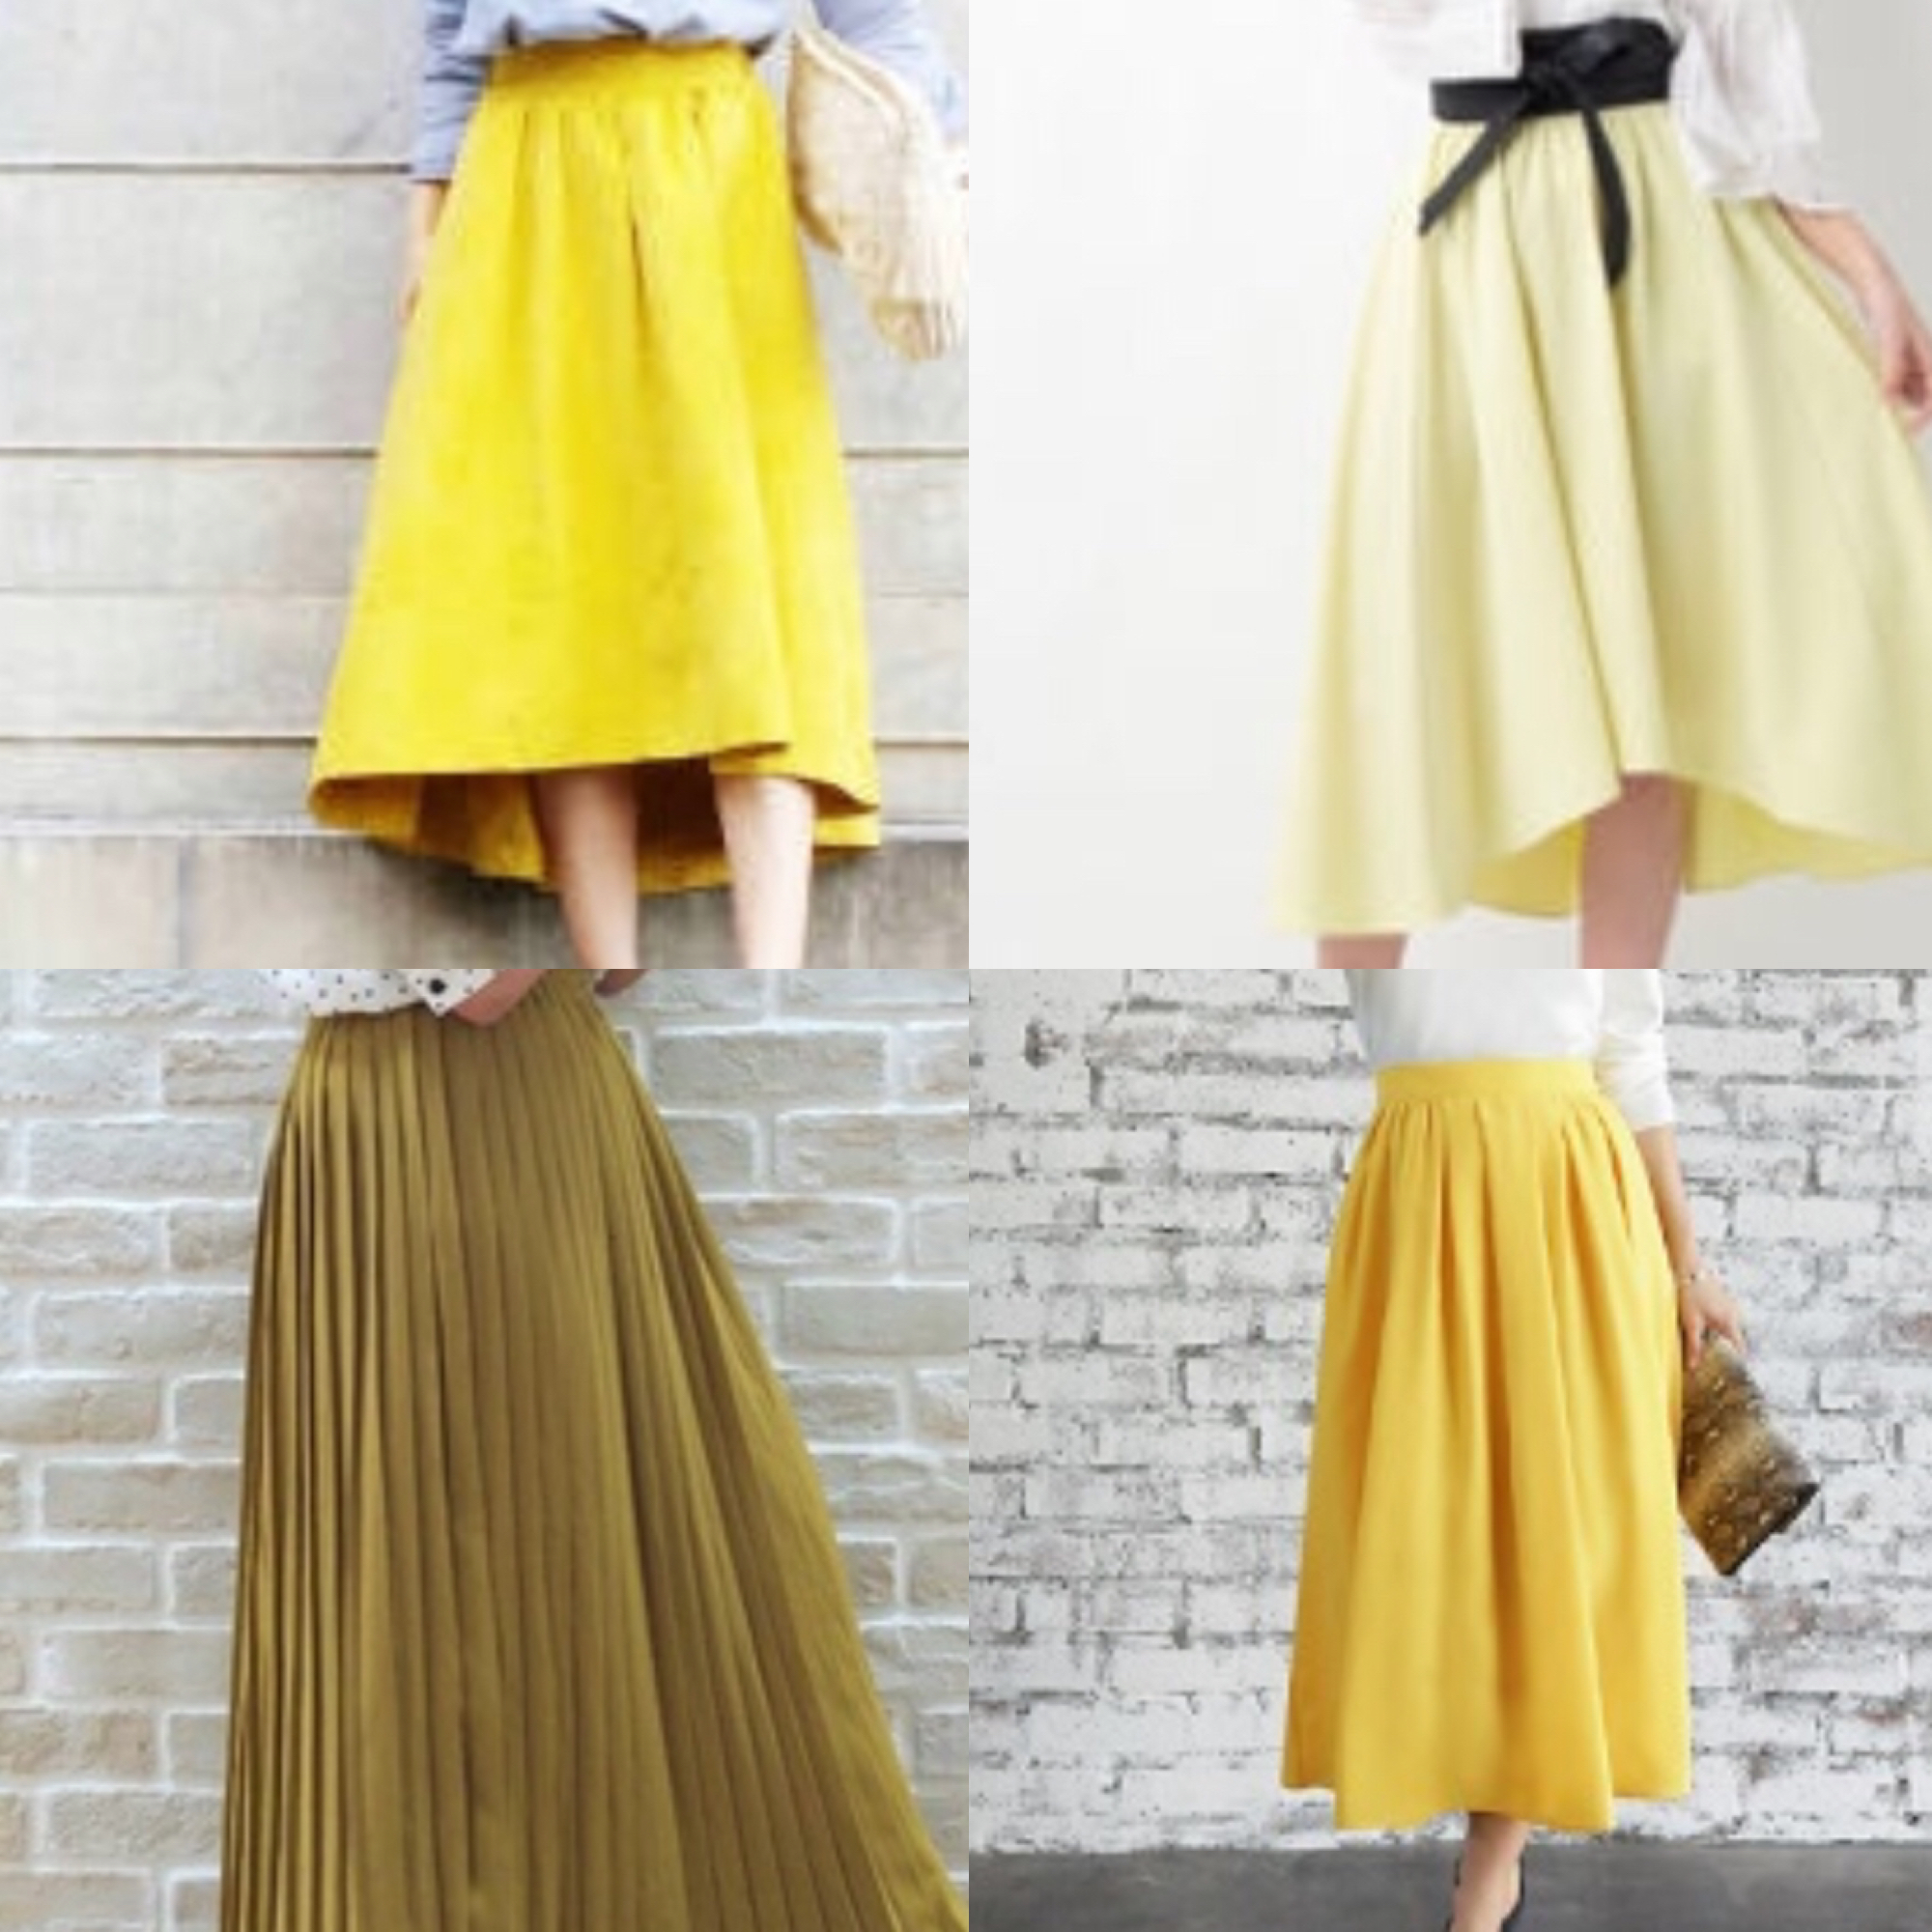 yellowskirt